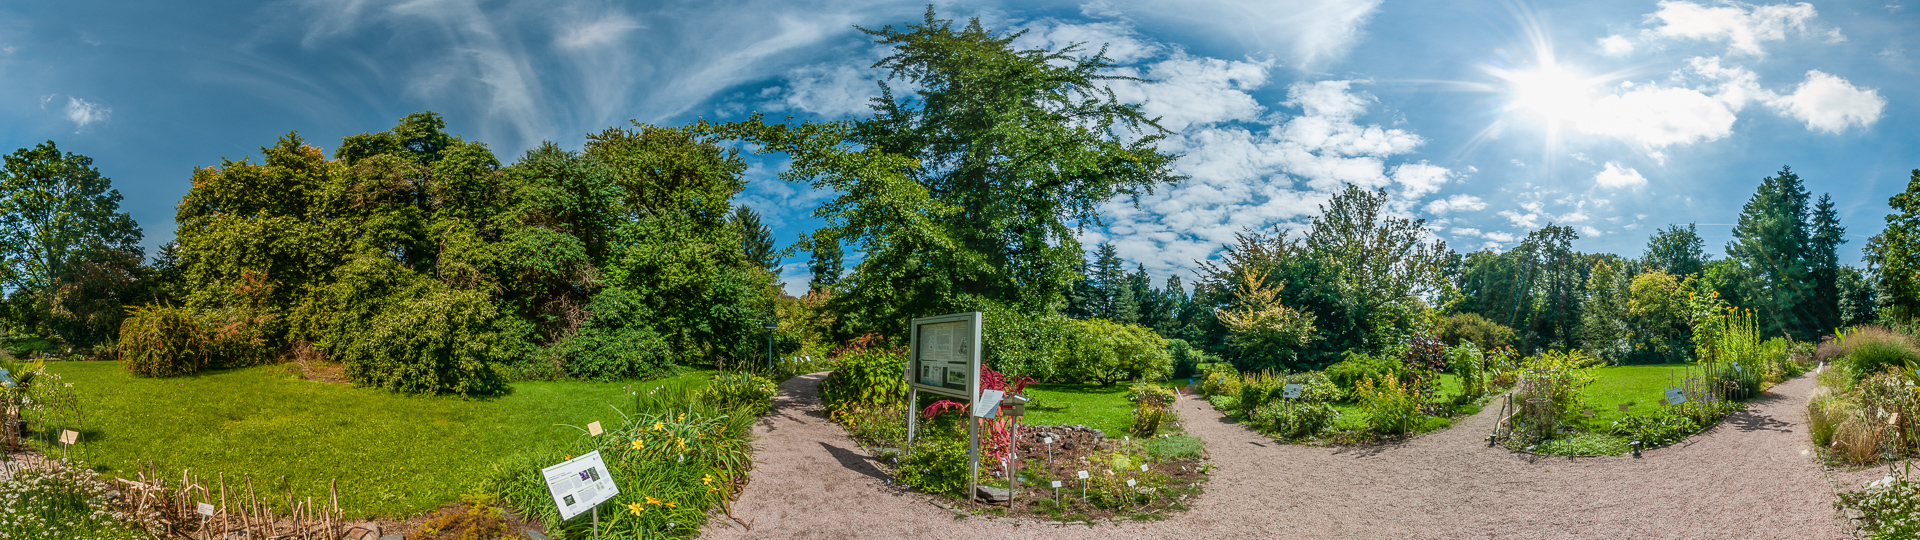 Botanischer-Garten-Darmstadt